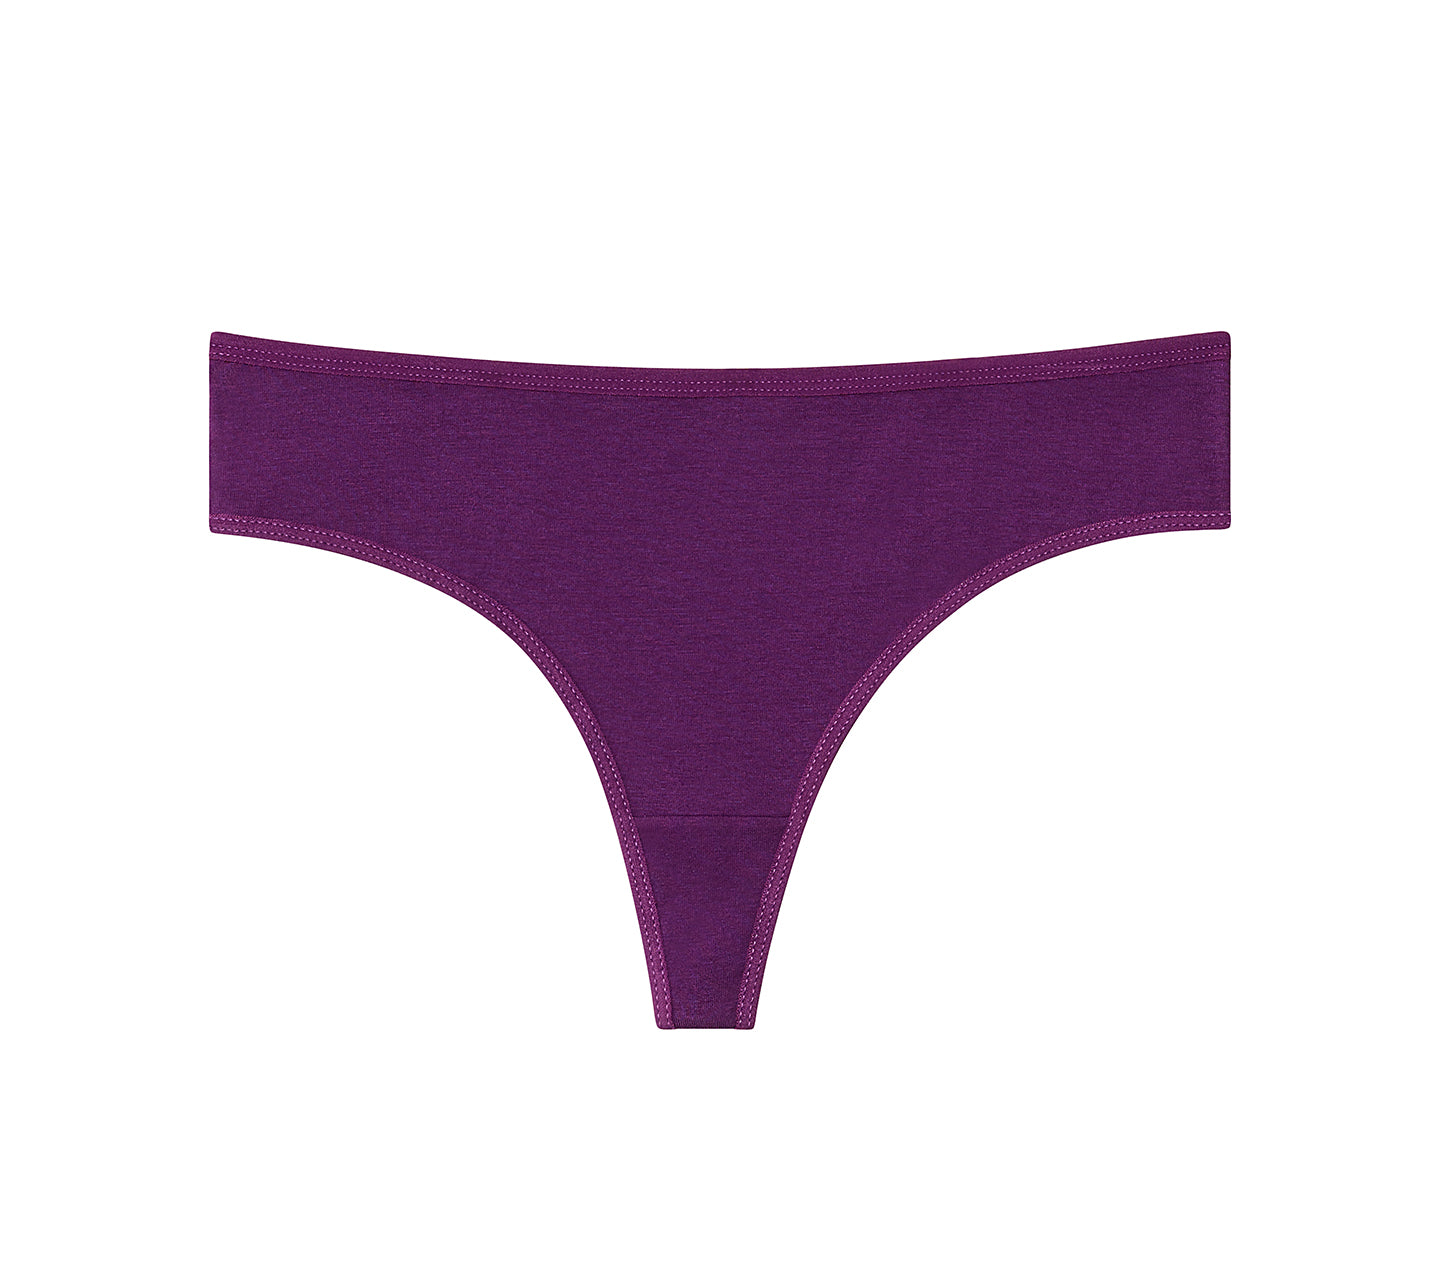 Women's Cotton Thongs Dark Colors G String Underwear (Pack of 6)